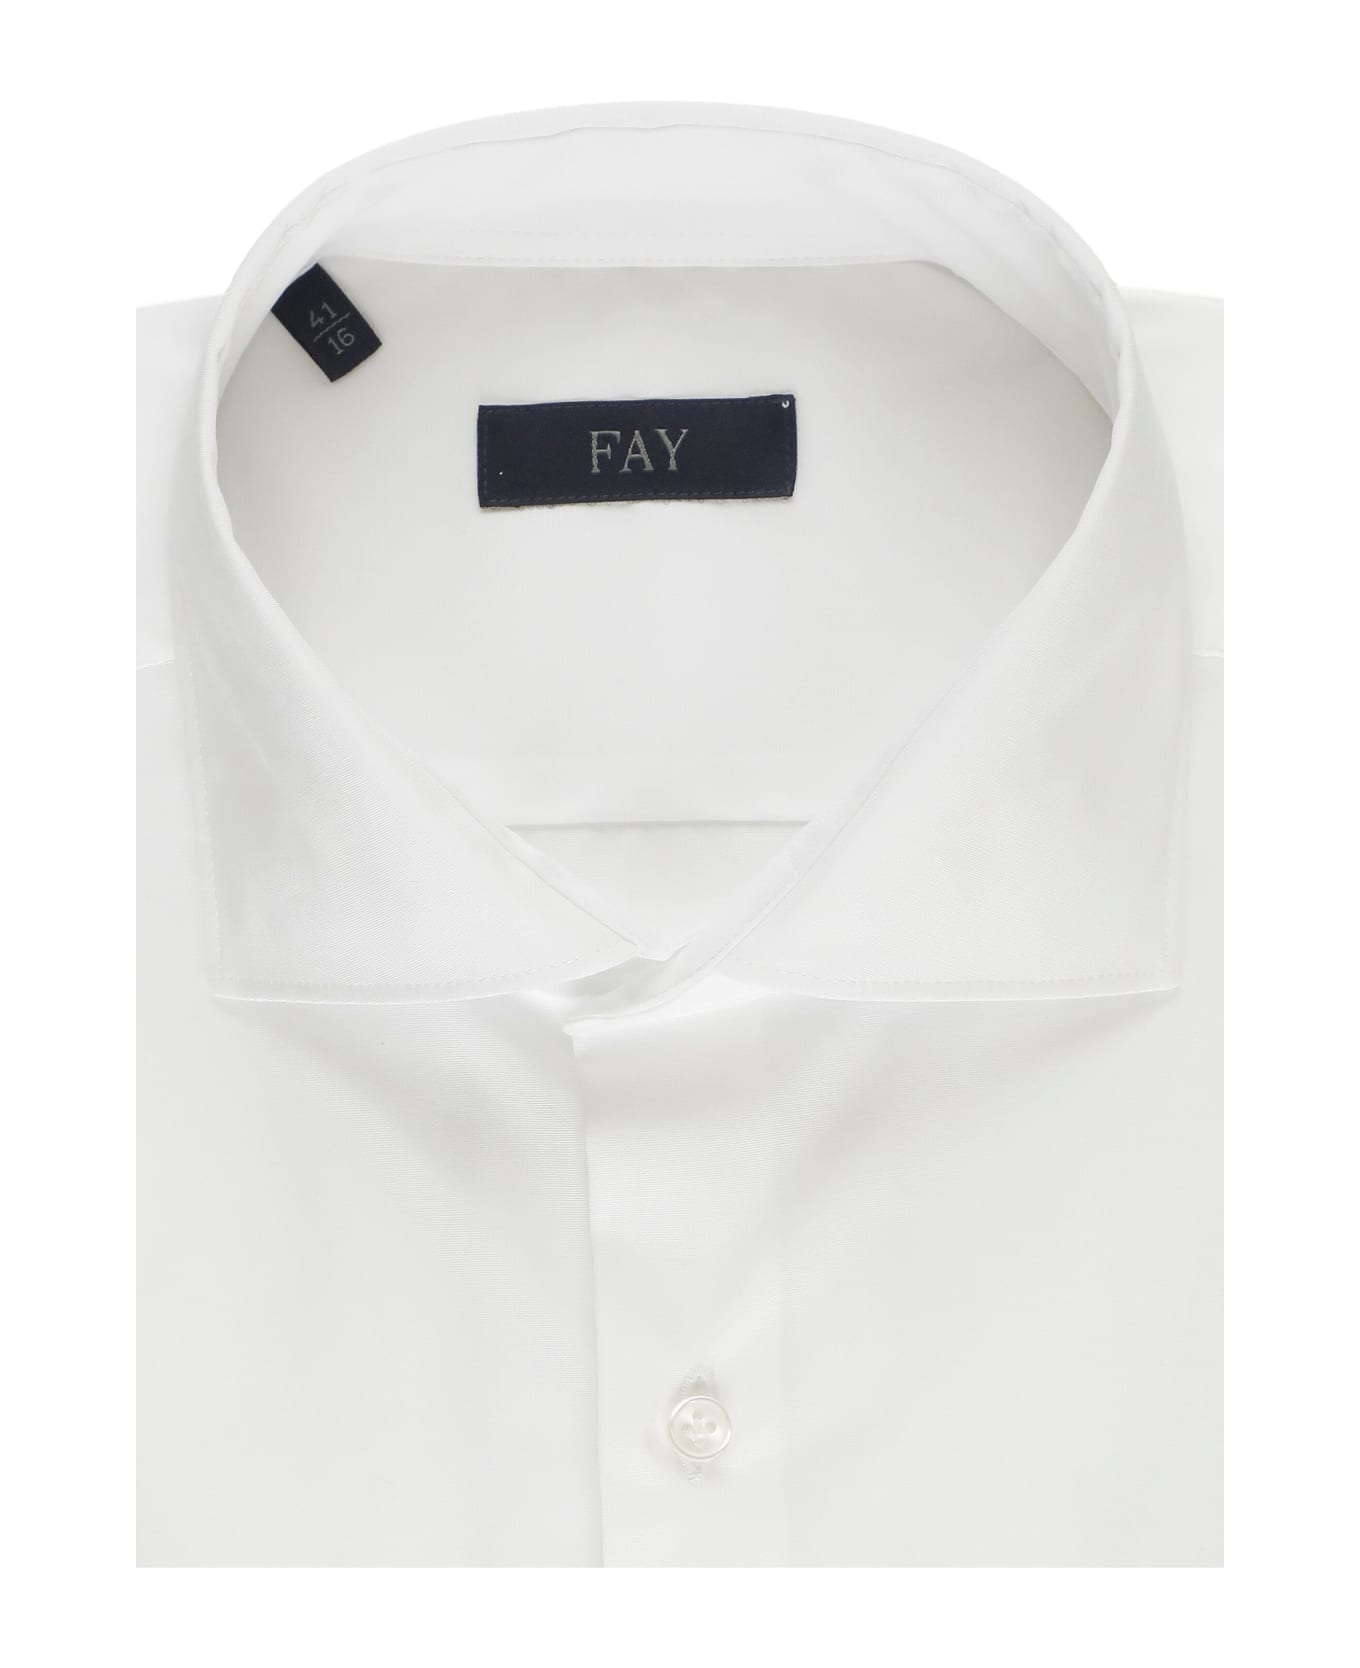 Fay Cotton Shirt シャツ